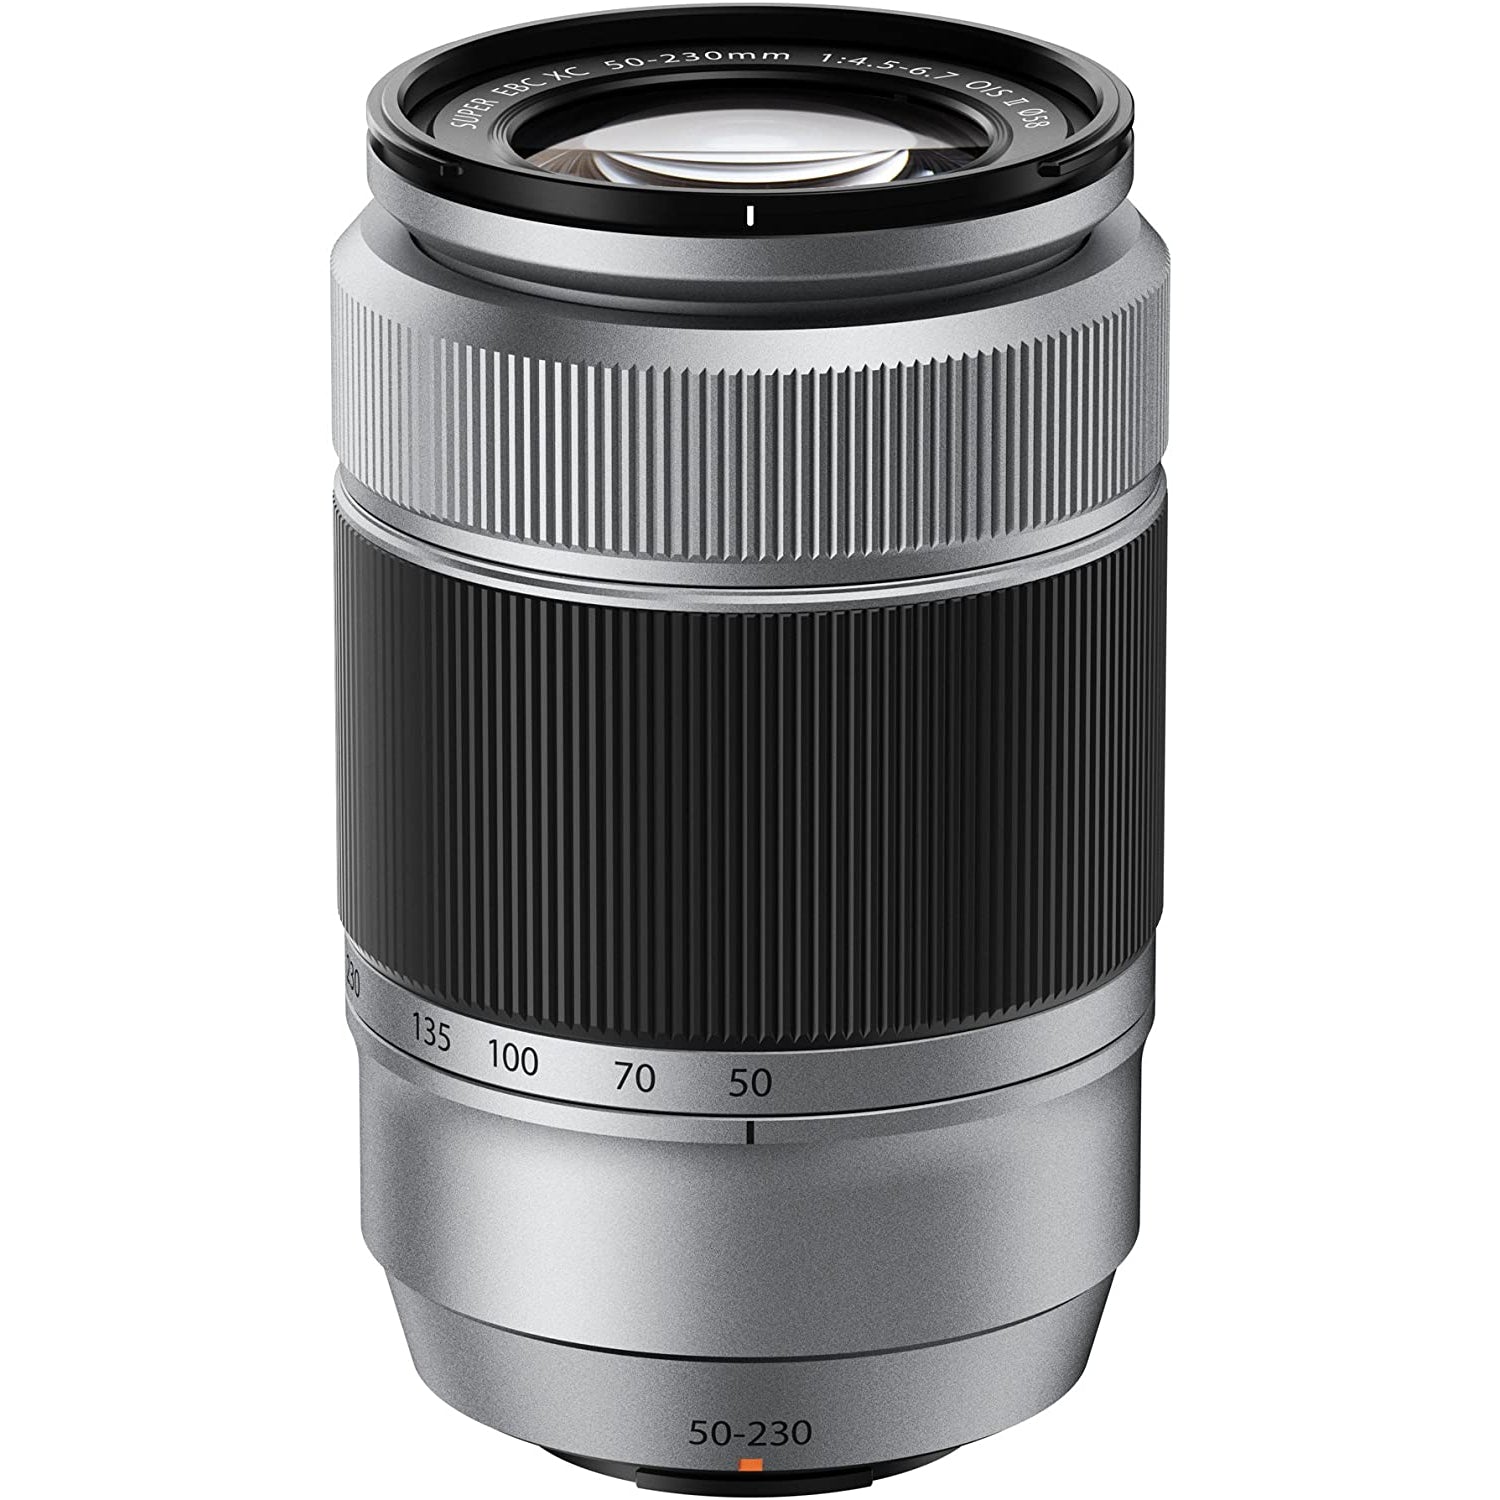 Fujifilm XC 50-230 mm f4.5-6.7 OIS II Lens - Silver